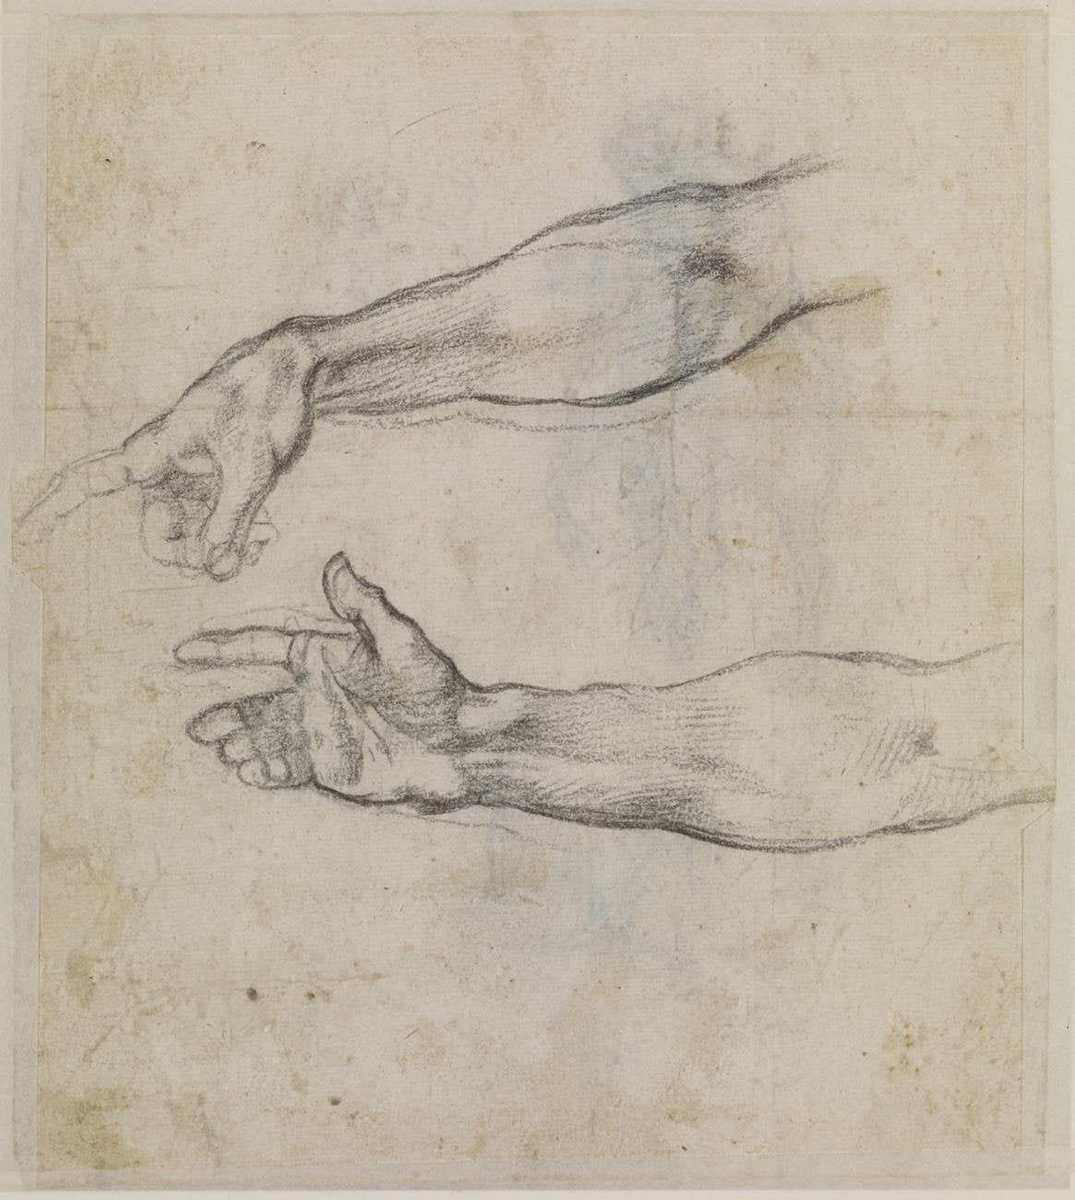 My sketches of Michelangelo’s sketches in preparation for the Creation of Adam 🥺👉🏻👈🏻 #sketch #realism #michelangelo #anatomicalart #anatomy